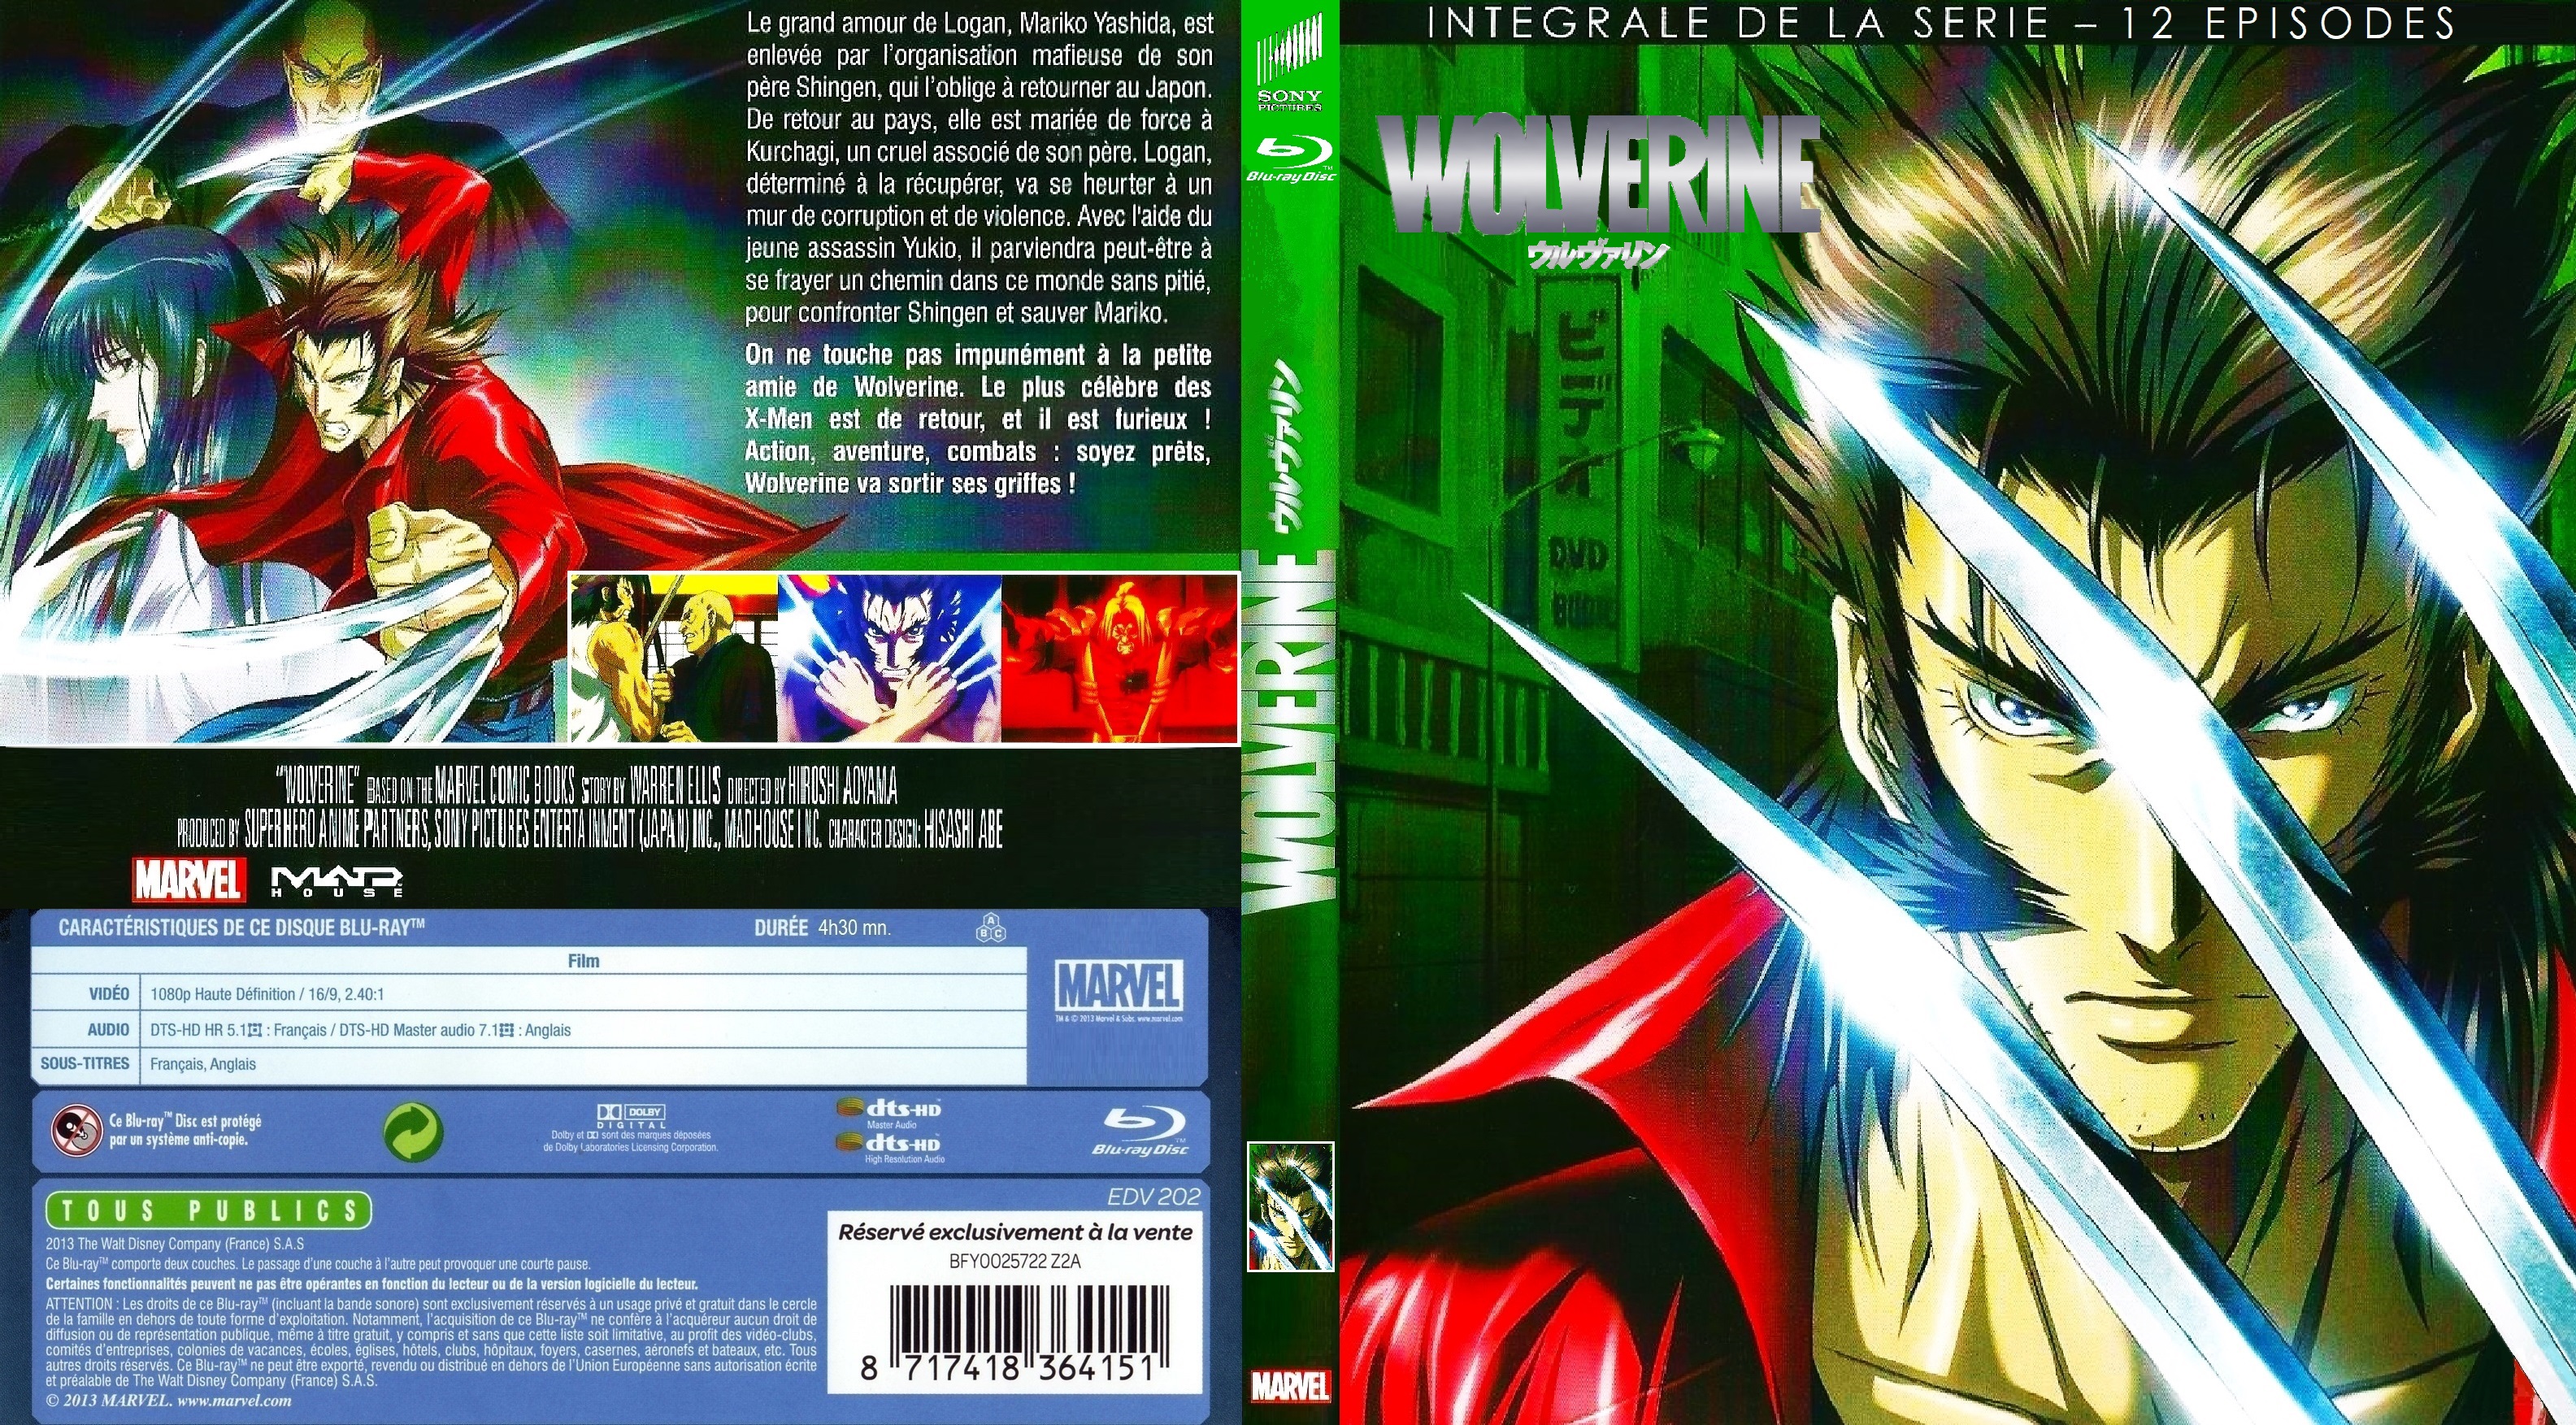 Jaquette DVD Wolverine la serie animee  BLU RAY custom